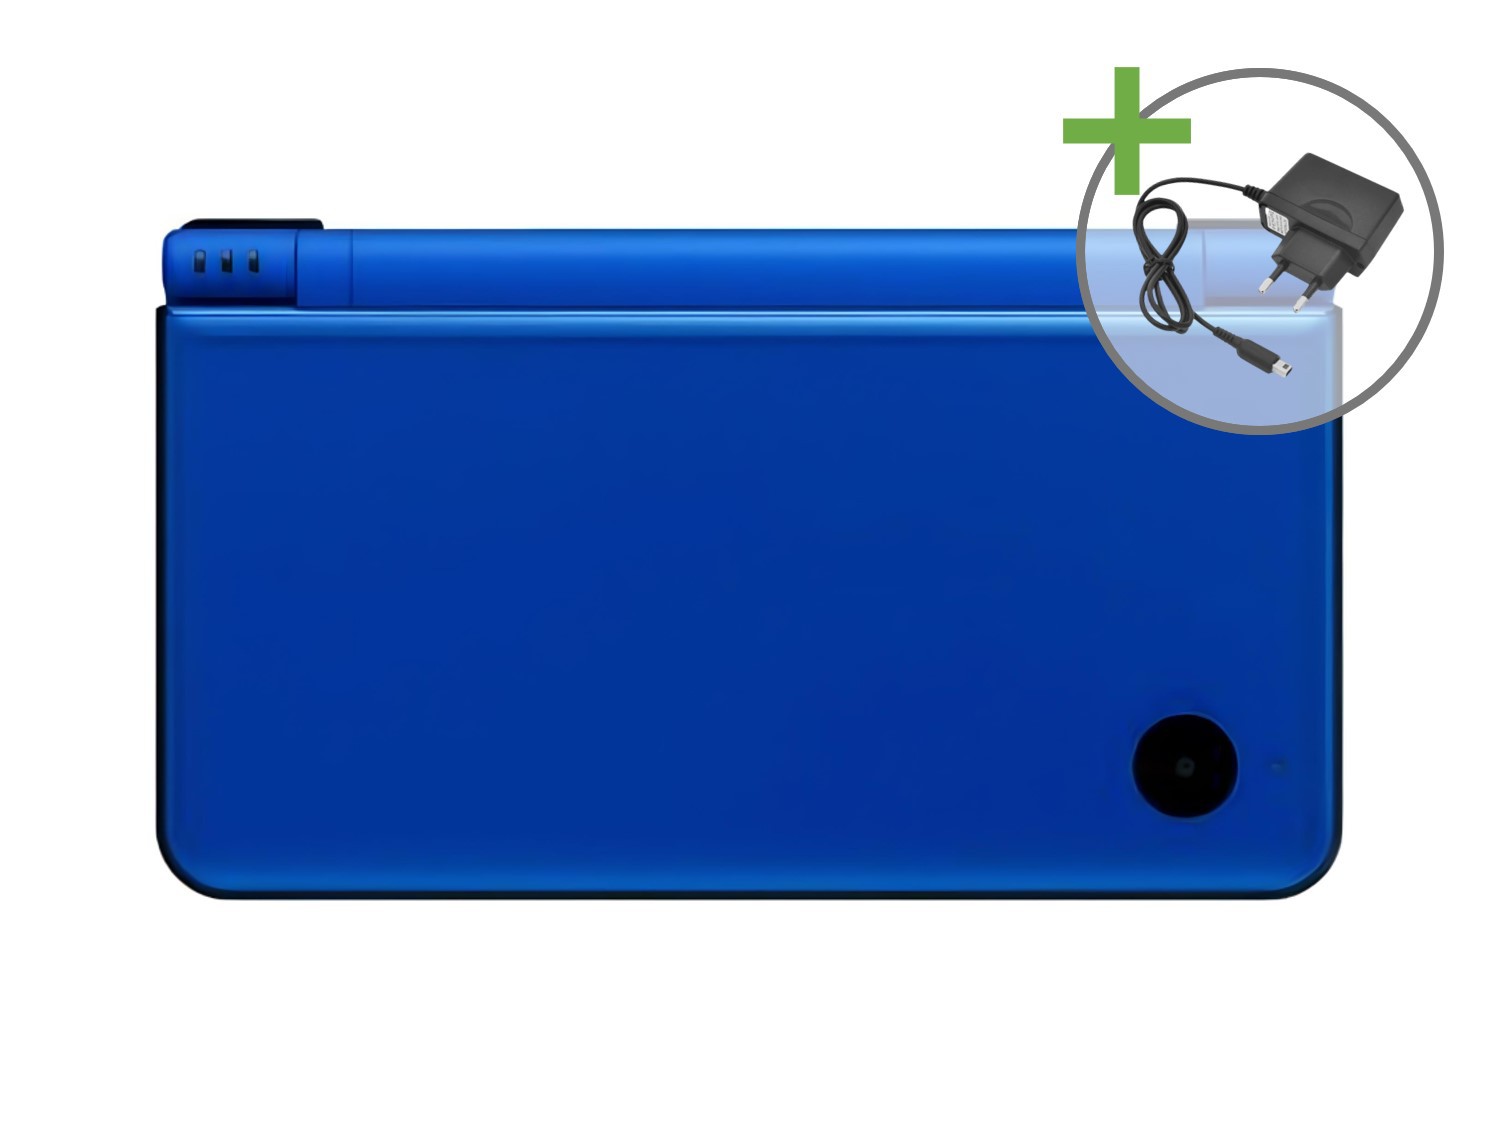 Nintendo DSi XL - Blue - Nintendo DS Hardware - 3